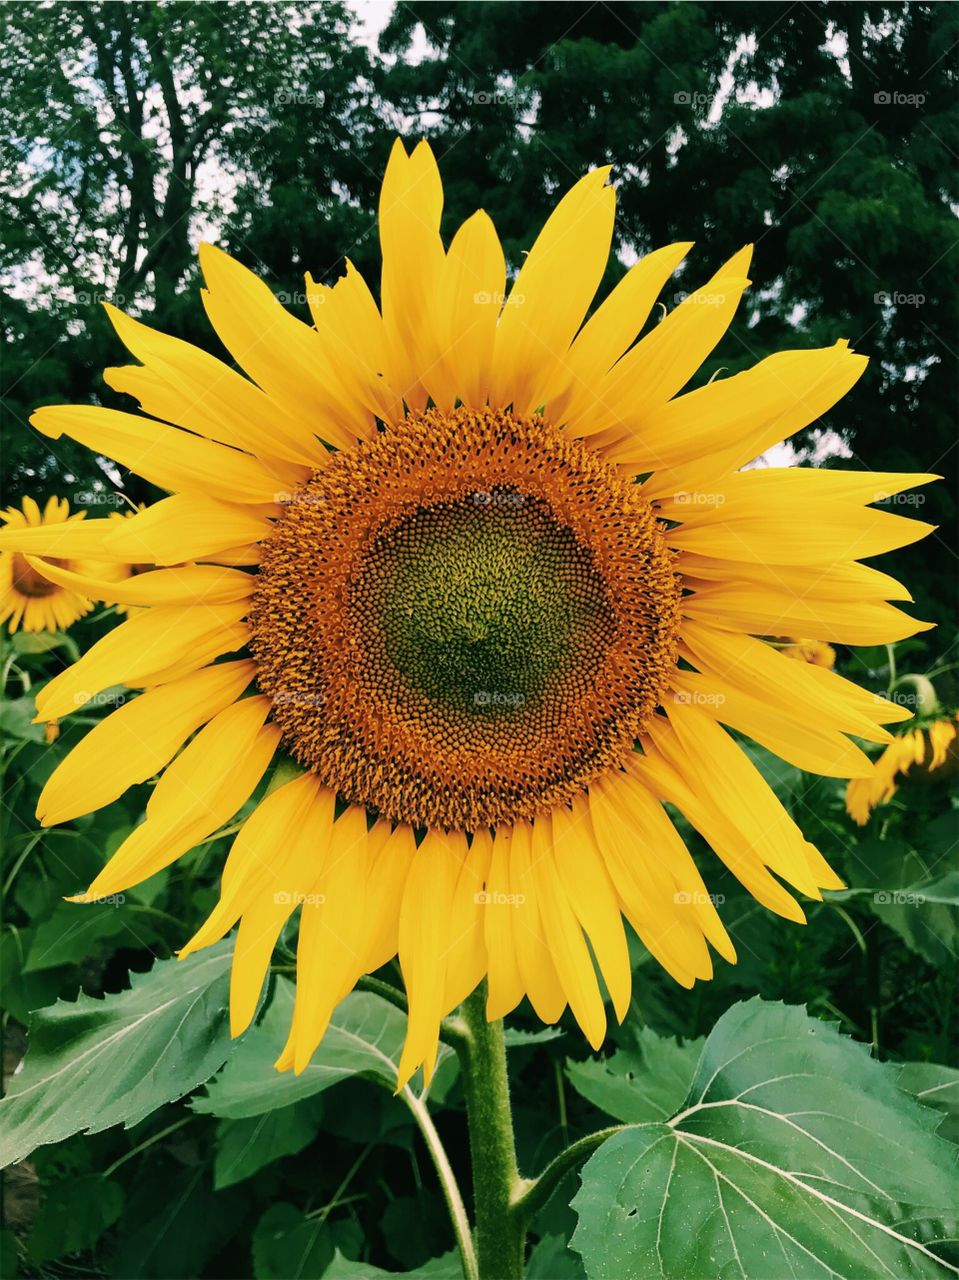 A beautiful sunflower 